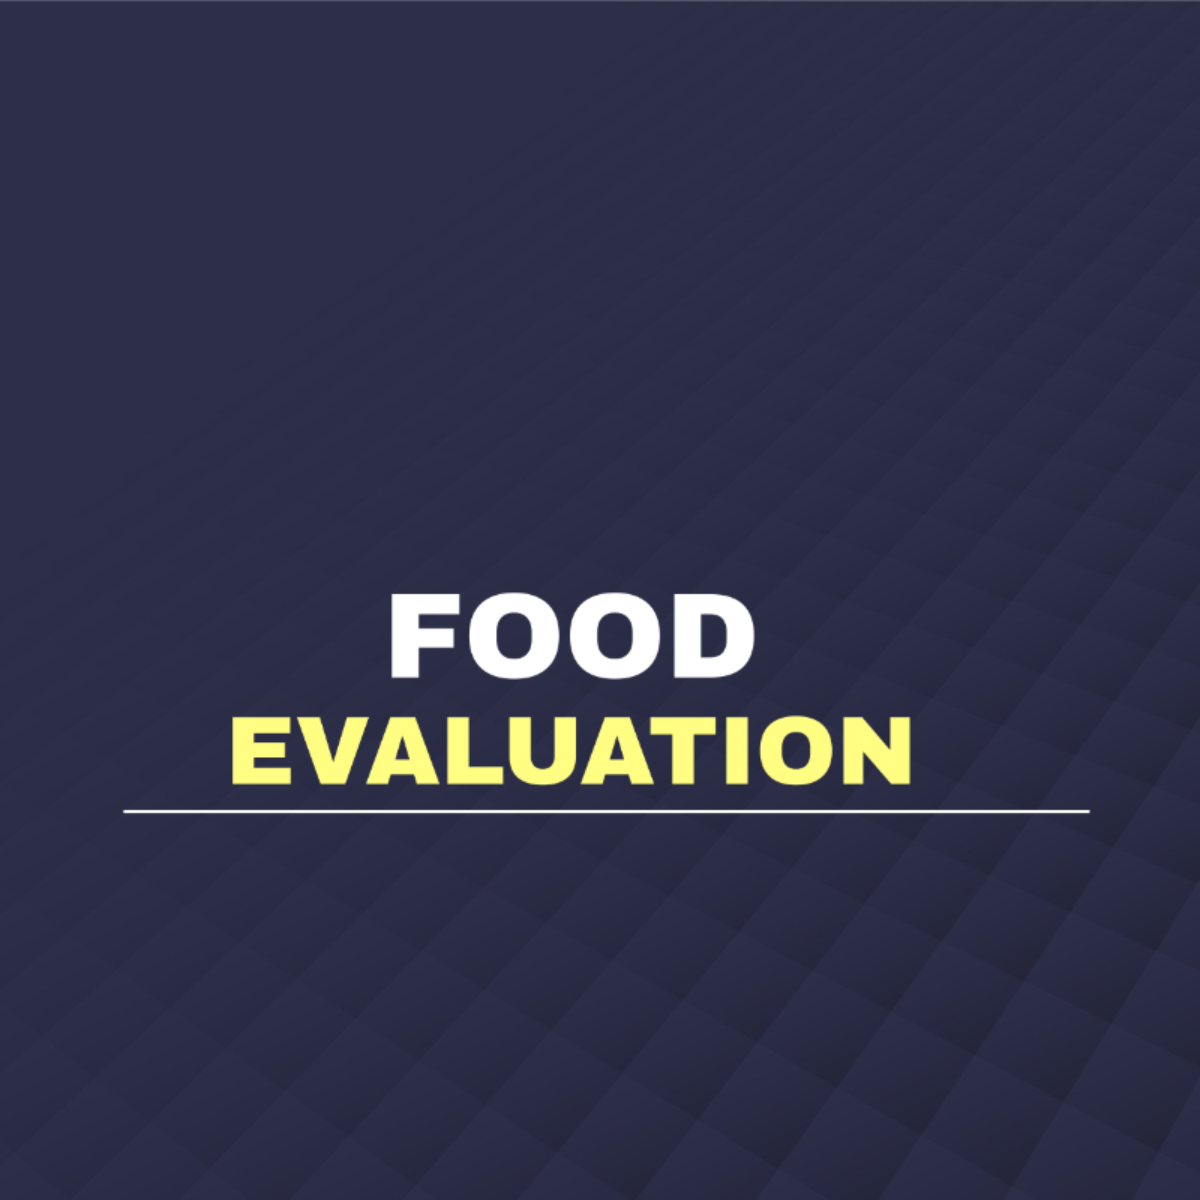 Food Evaluation Template